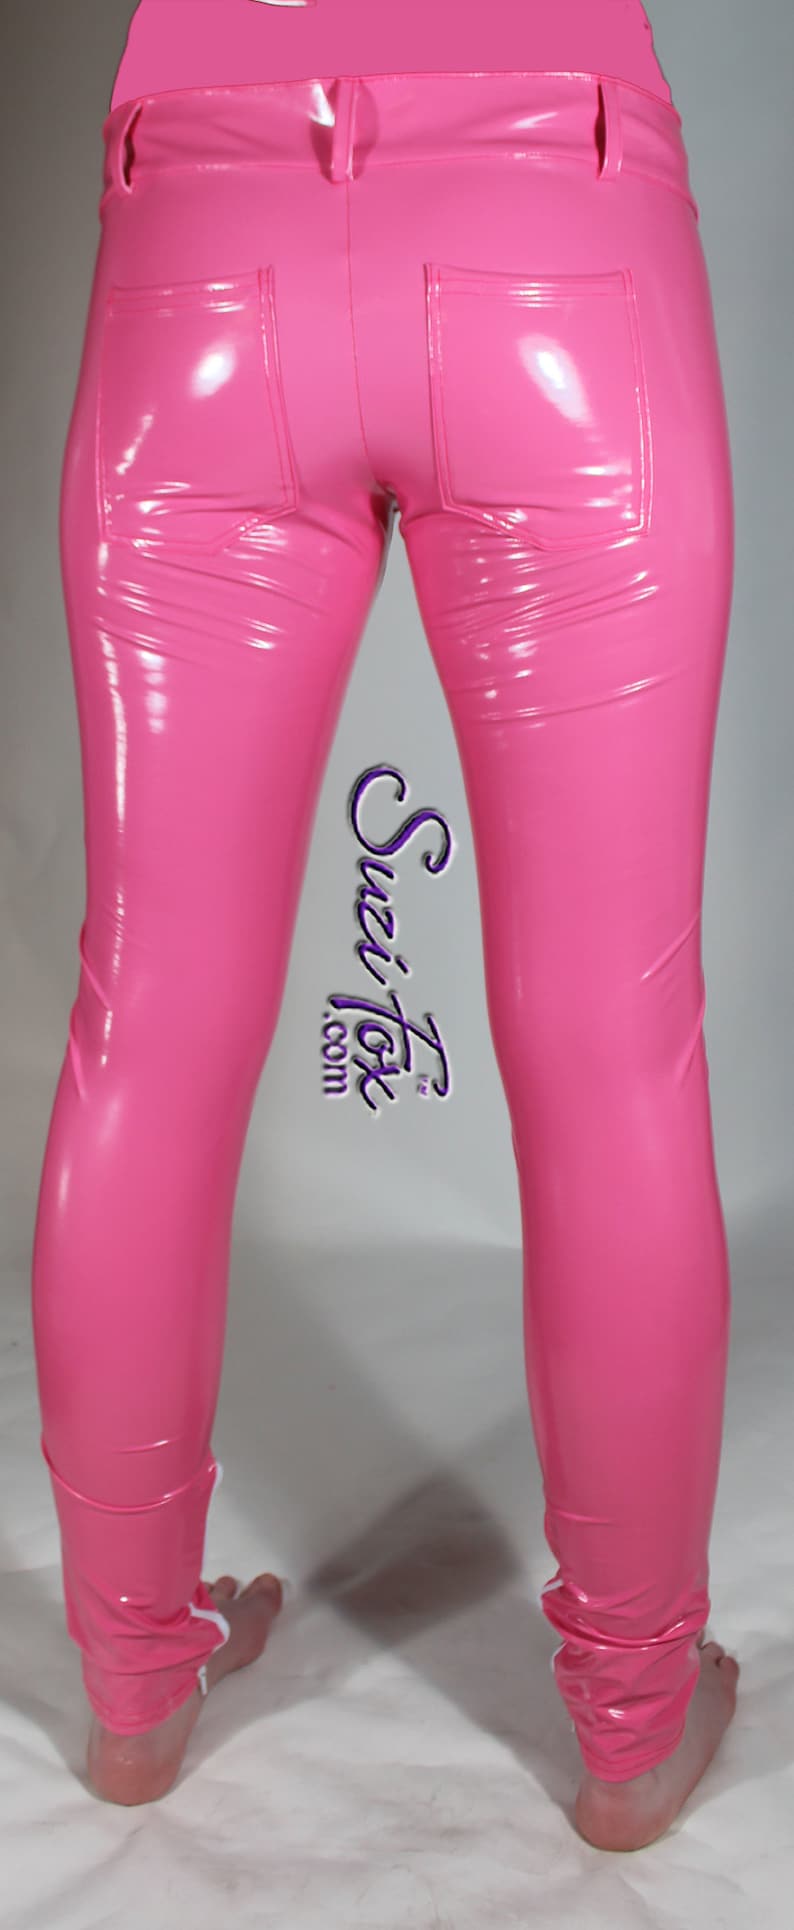 Hot Pink Gloss Vinyl/pvc Jean Style Leggings by Suzi Fox - Etsy